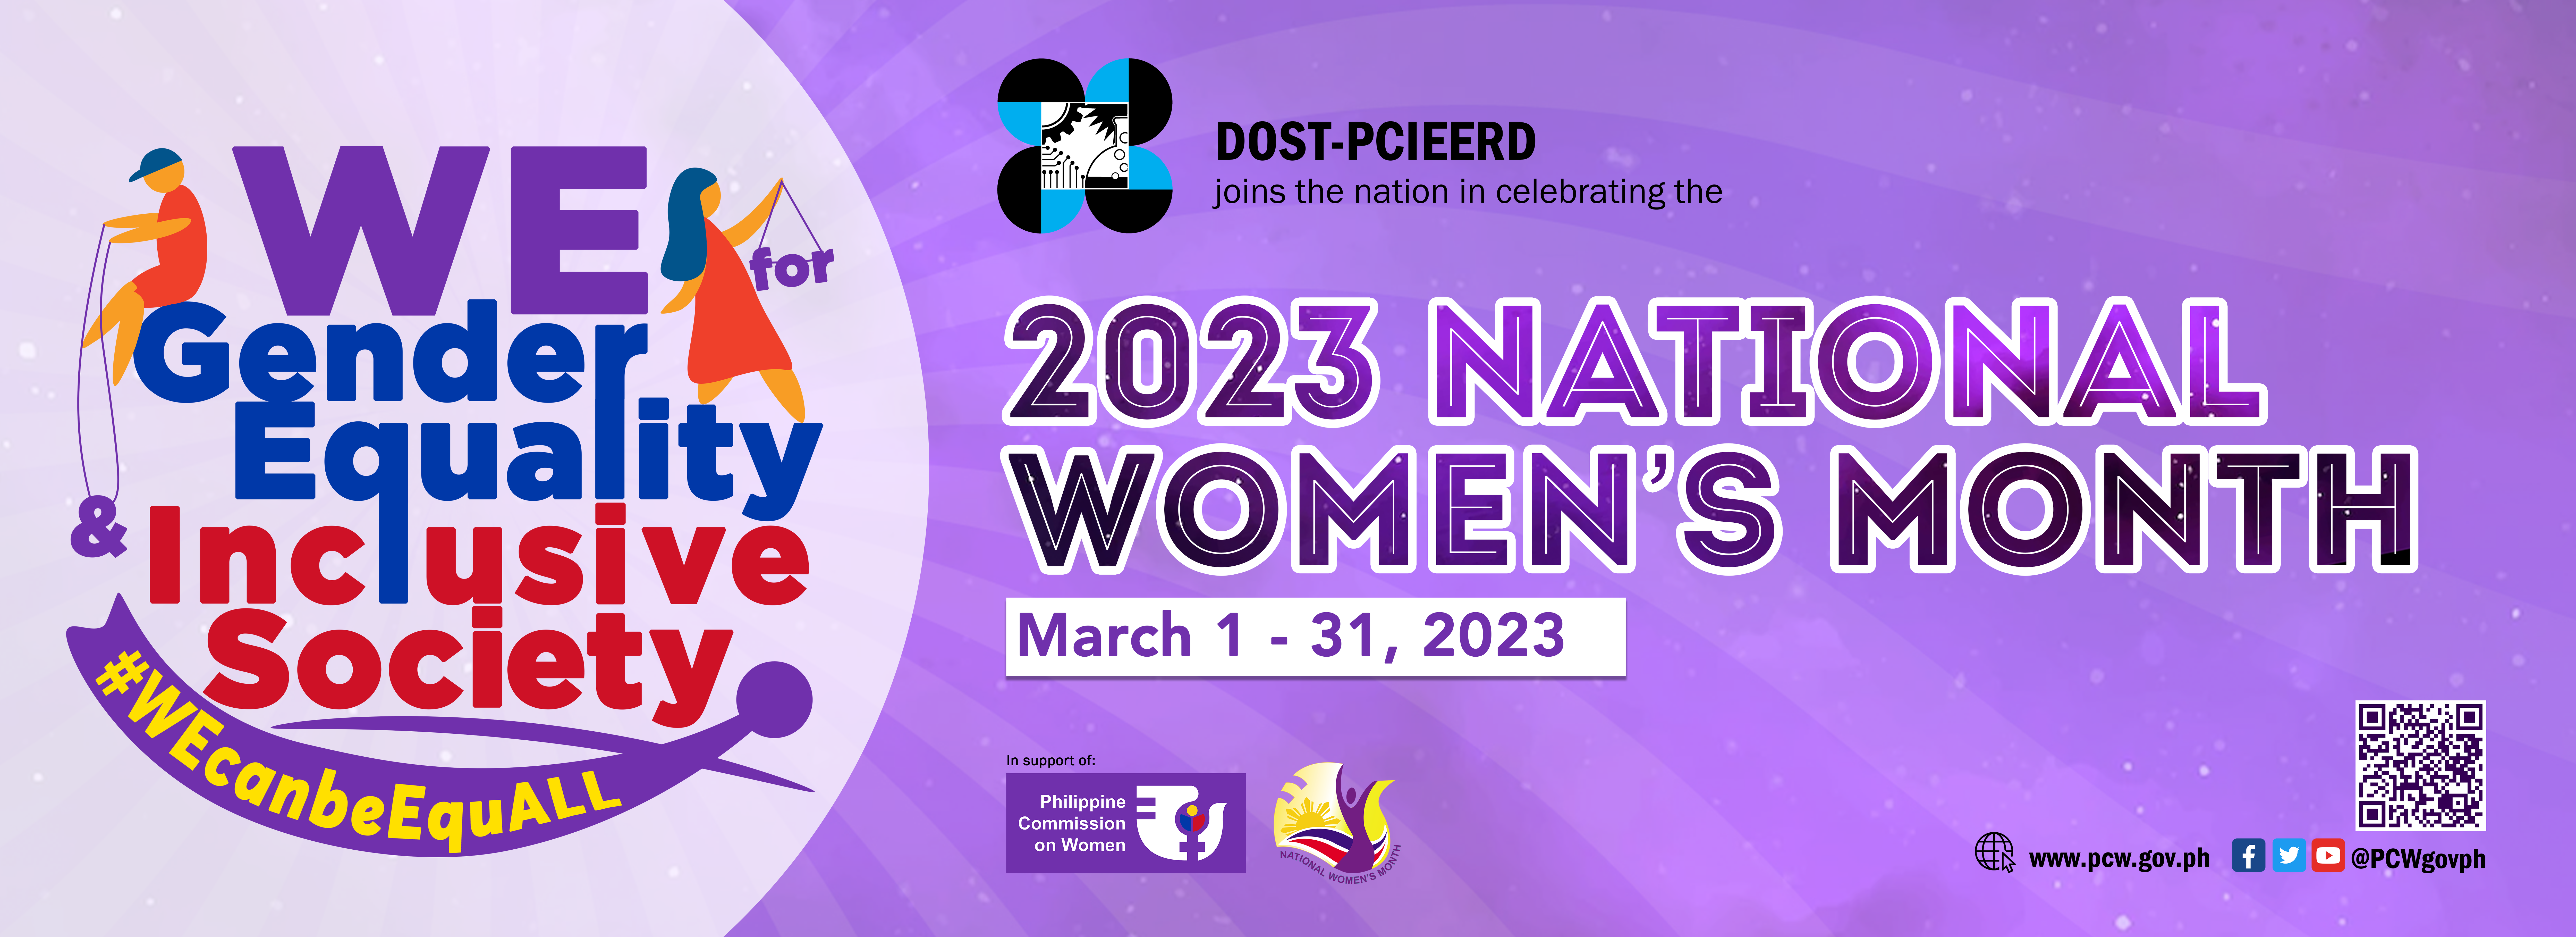 2023 National Women's Month Celebration